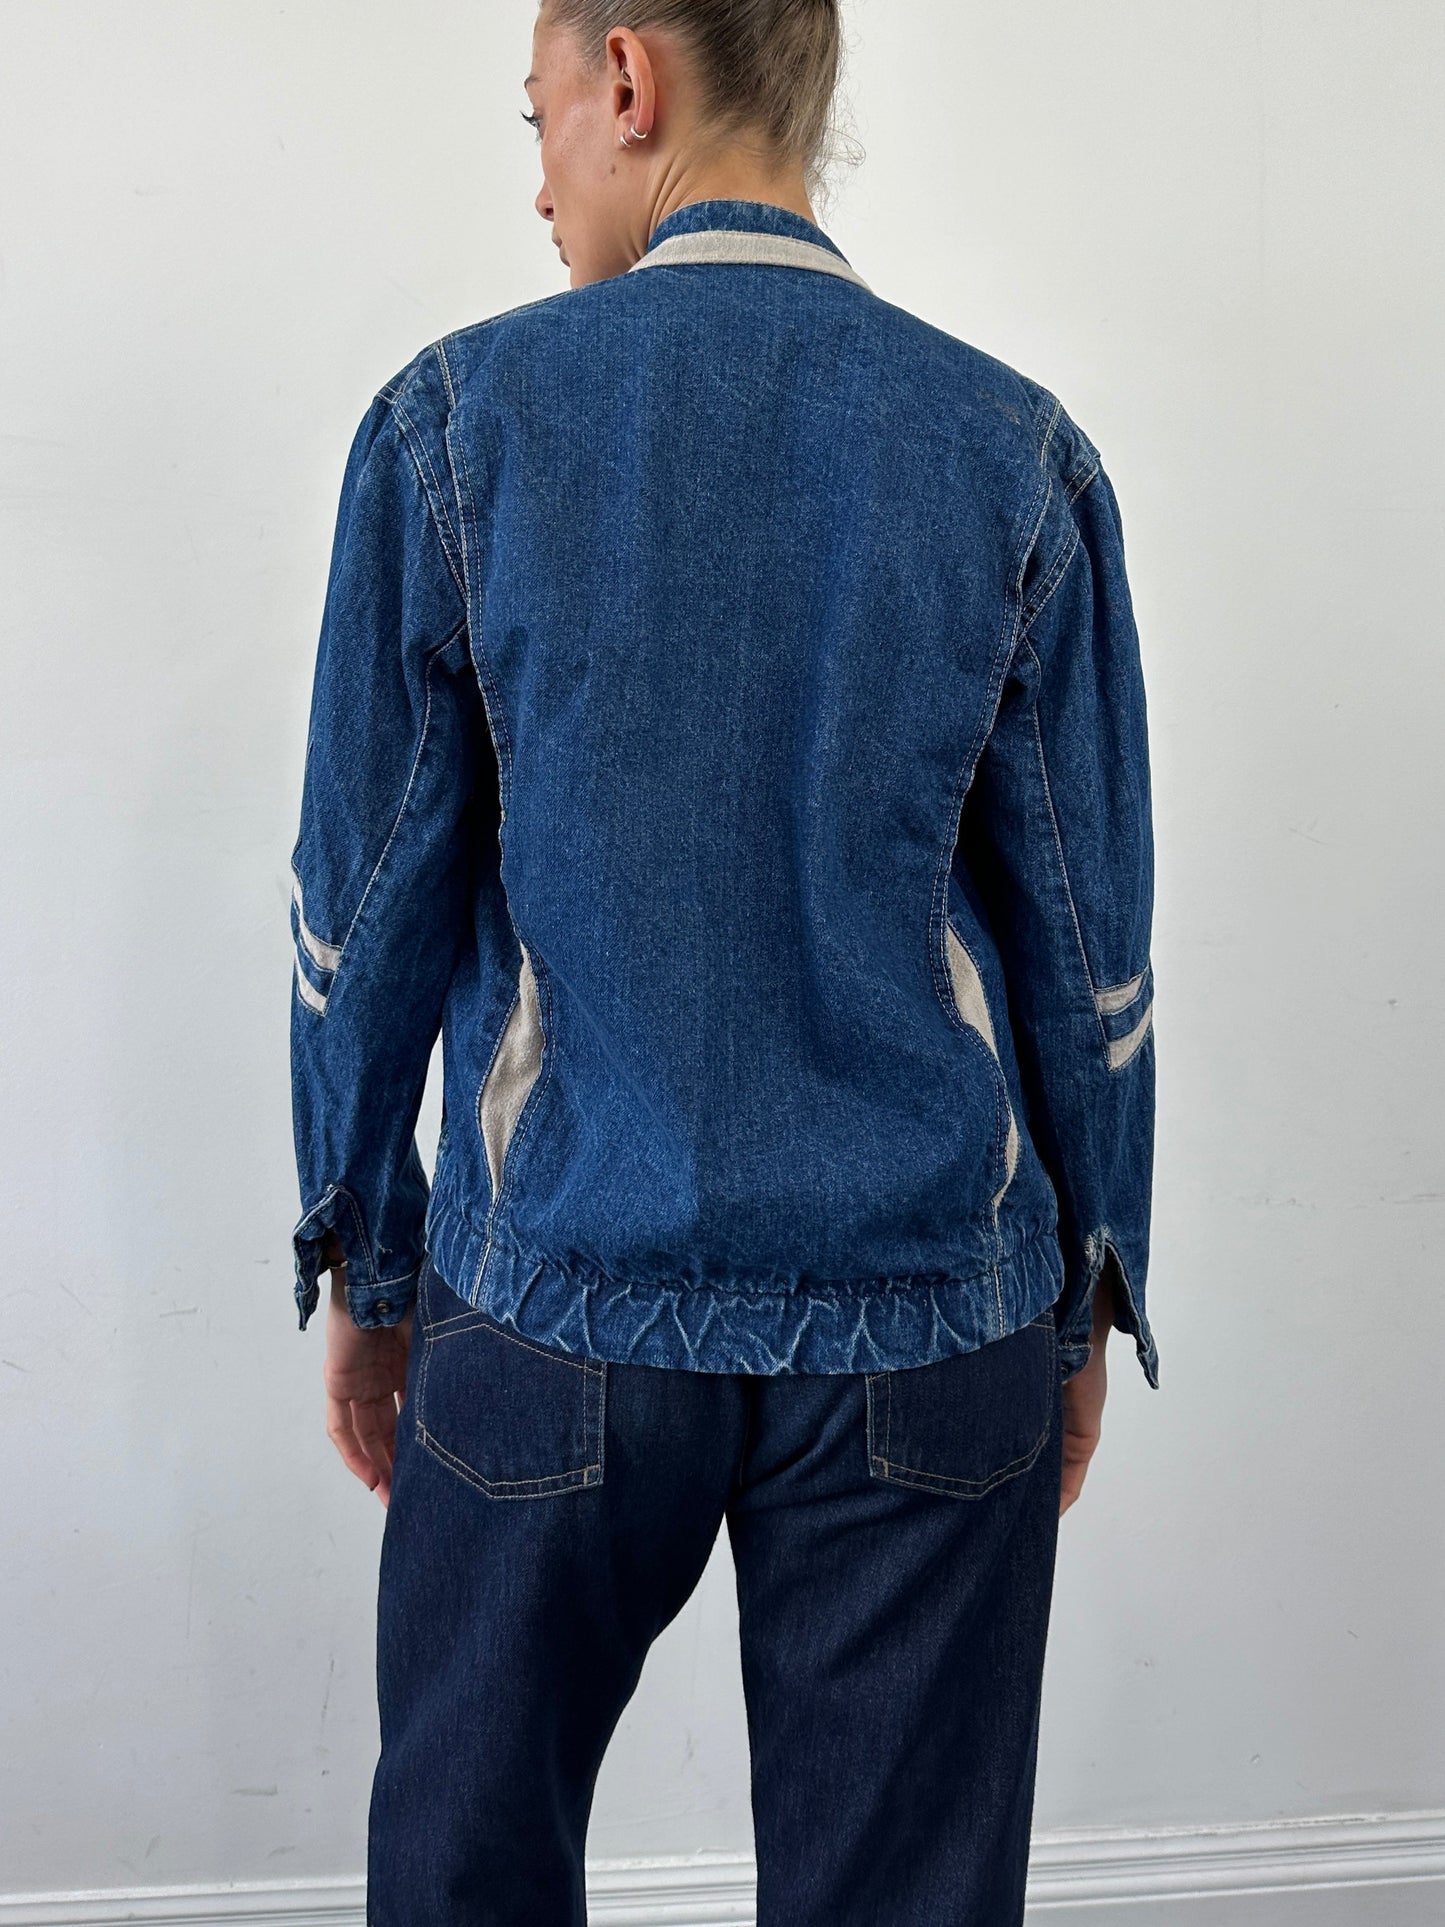 Vintage Contrast Stitch Denim Jacket - S/M